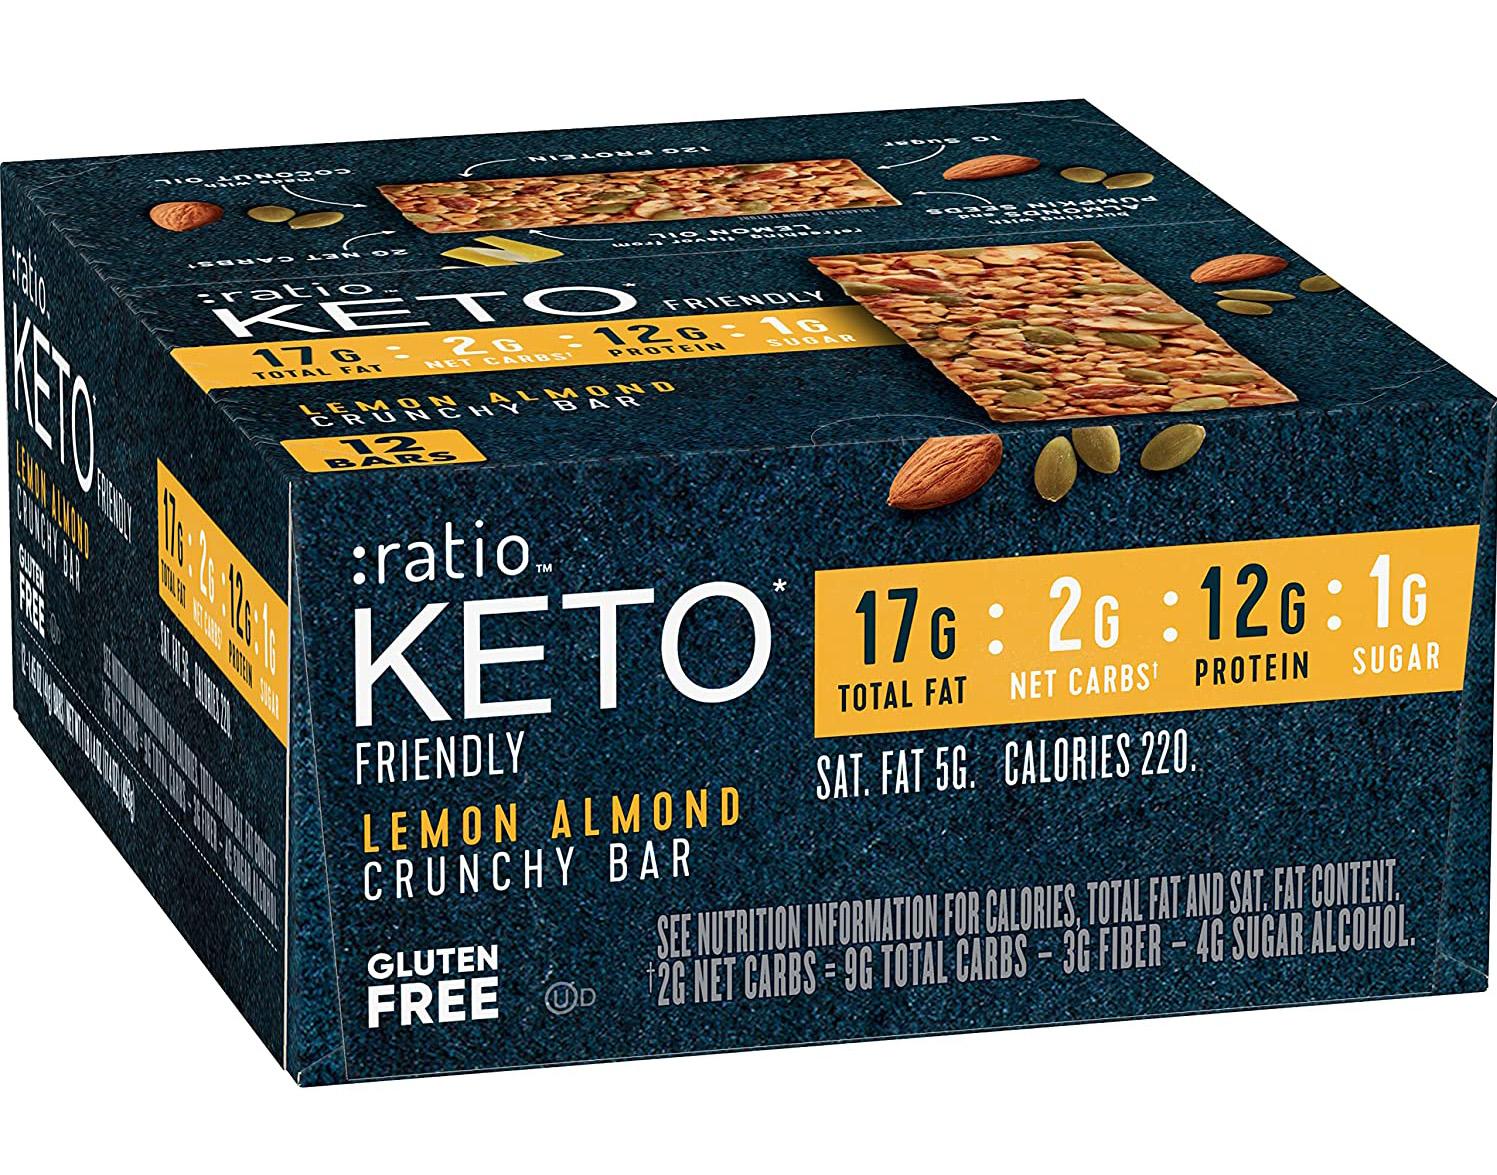 12 ratio Keto Friendly Lemon Almond Crunchy Bars for $15.05 Shipped